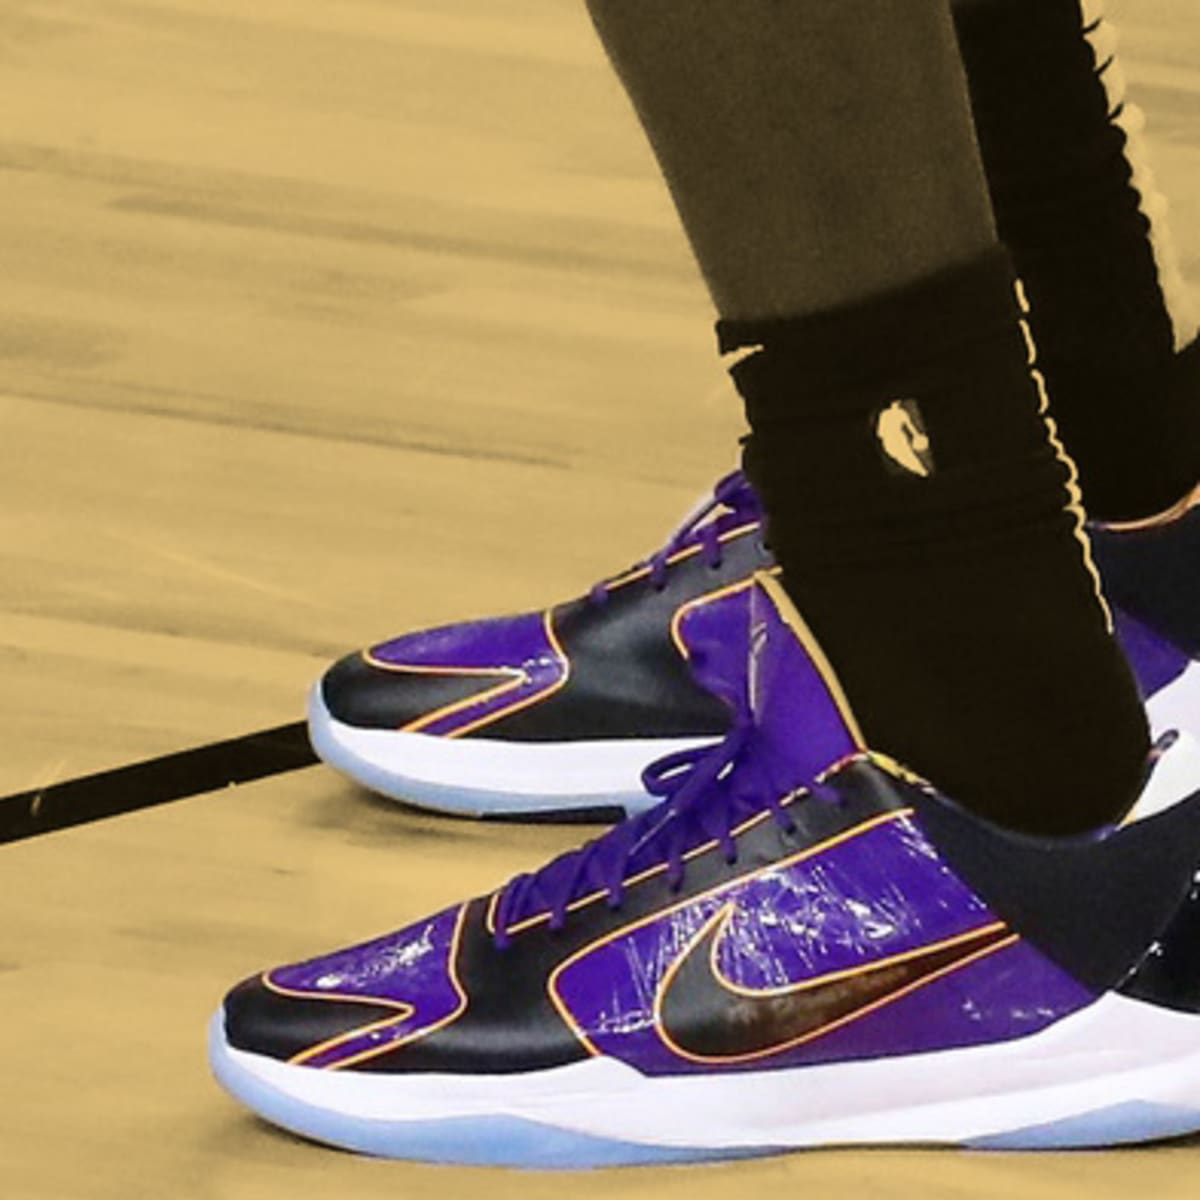 What Pros Wear: Kobe Bryant's Nike Kobe 11 Shoes - What Pros Wear